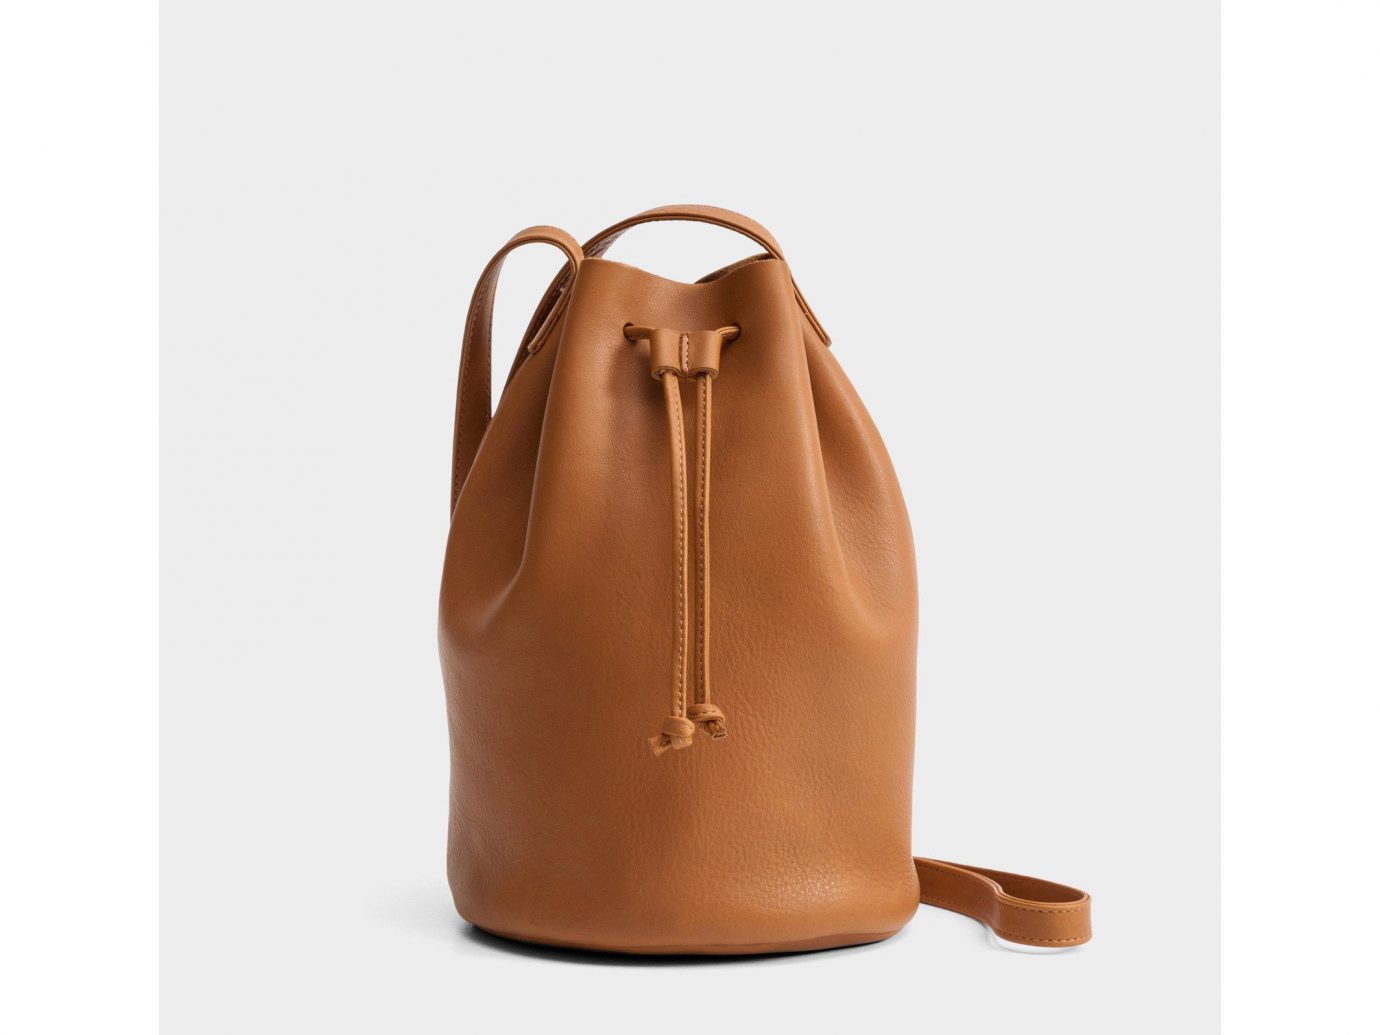 Style + Design brown bag product leather handbag caramel color product design